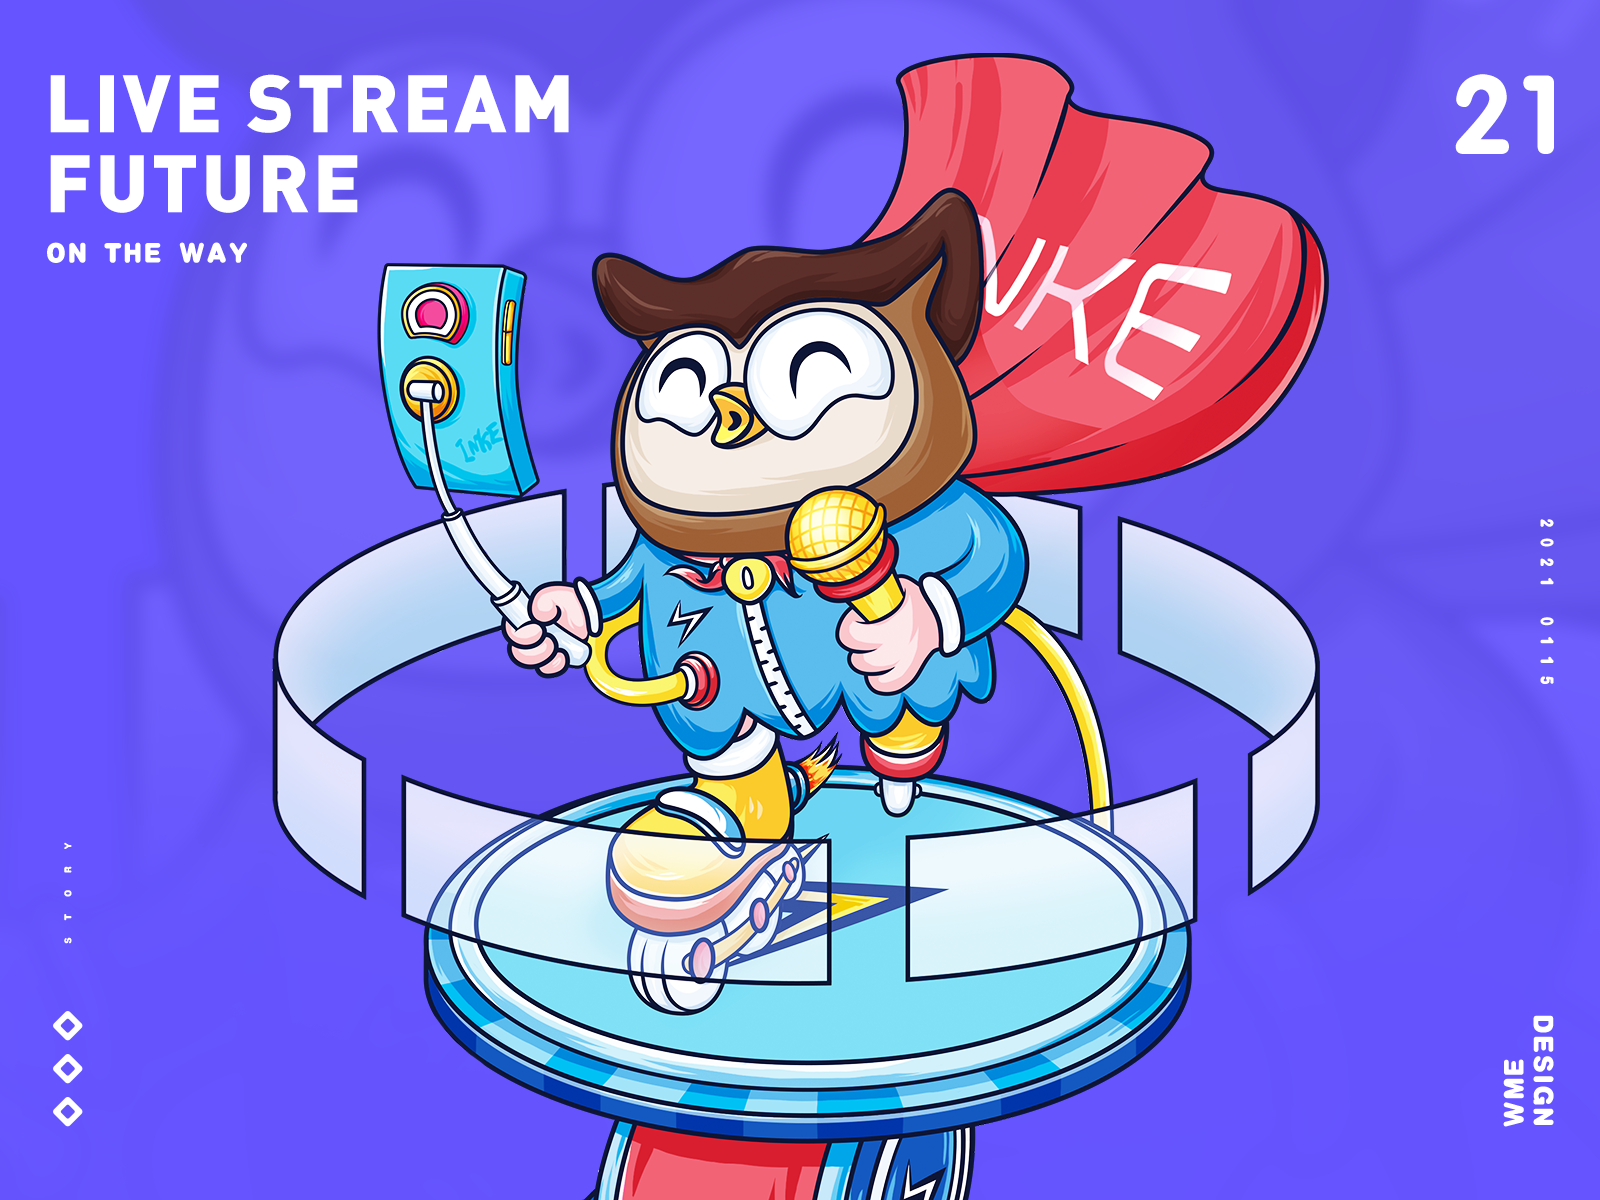 Live stream future affinity designer design illustration live stream owl sing singer wme